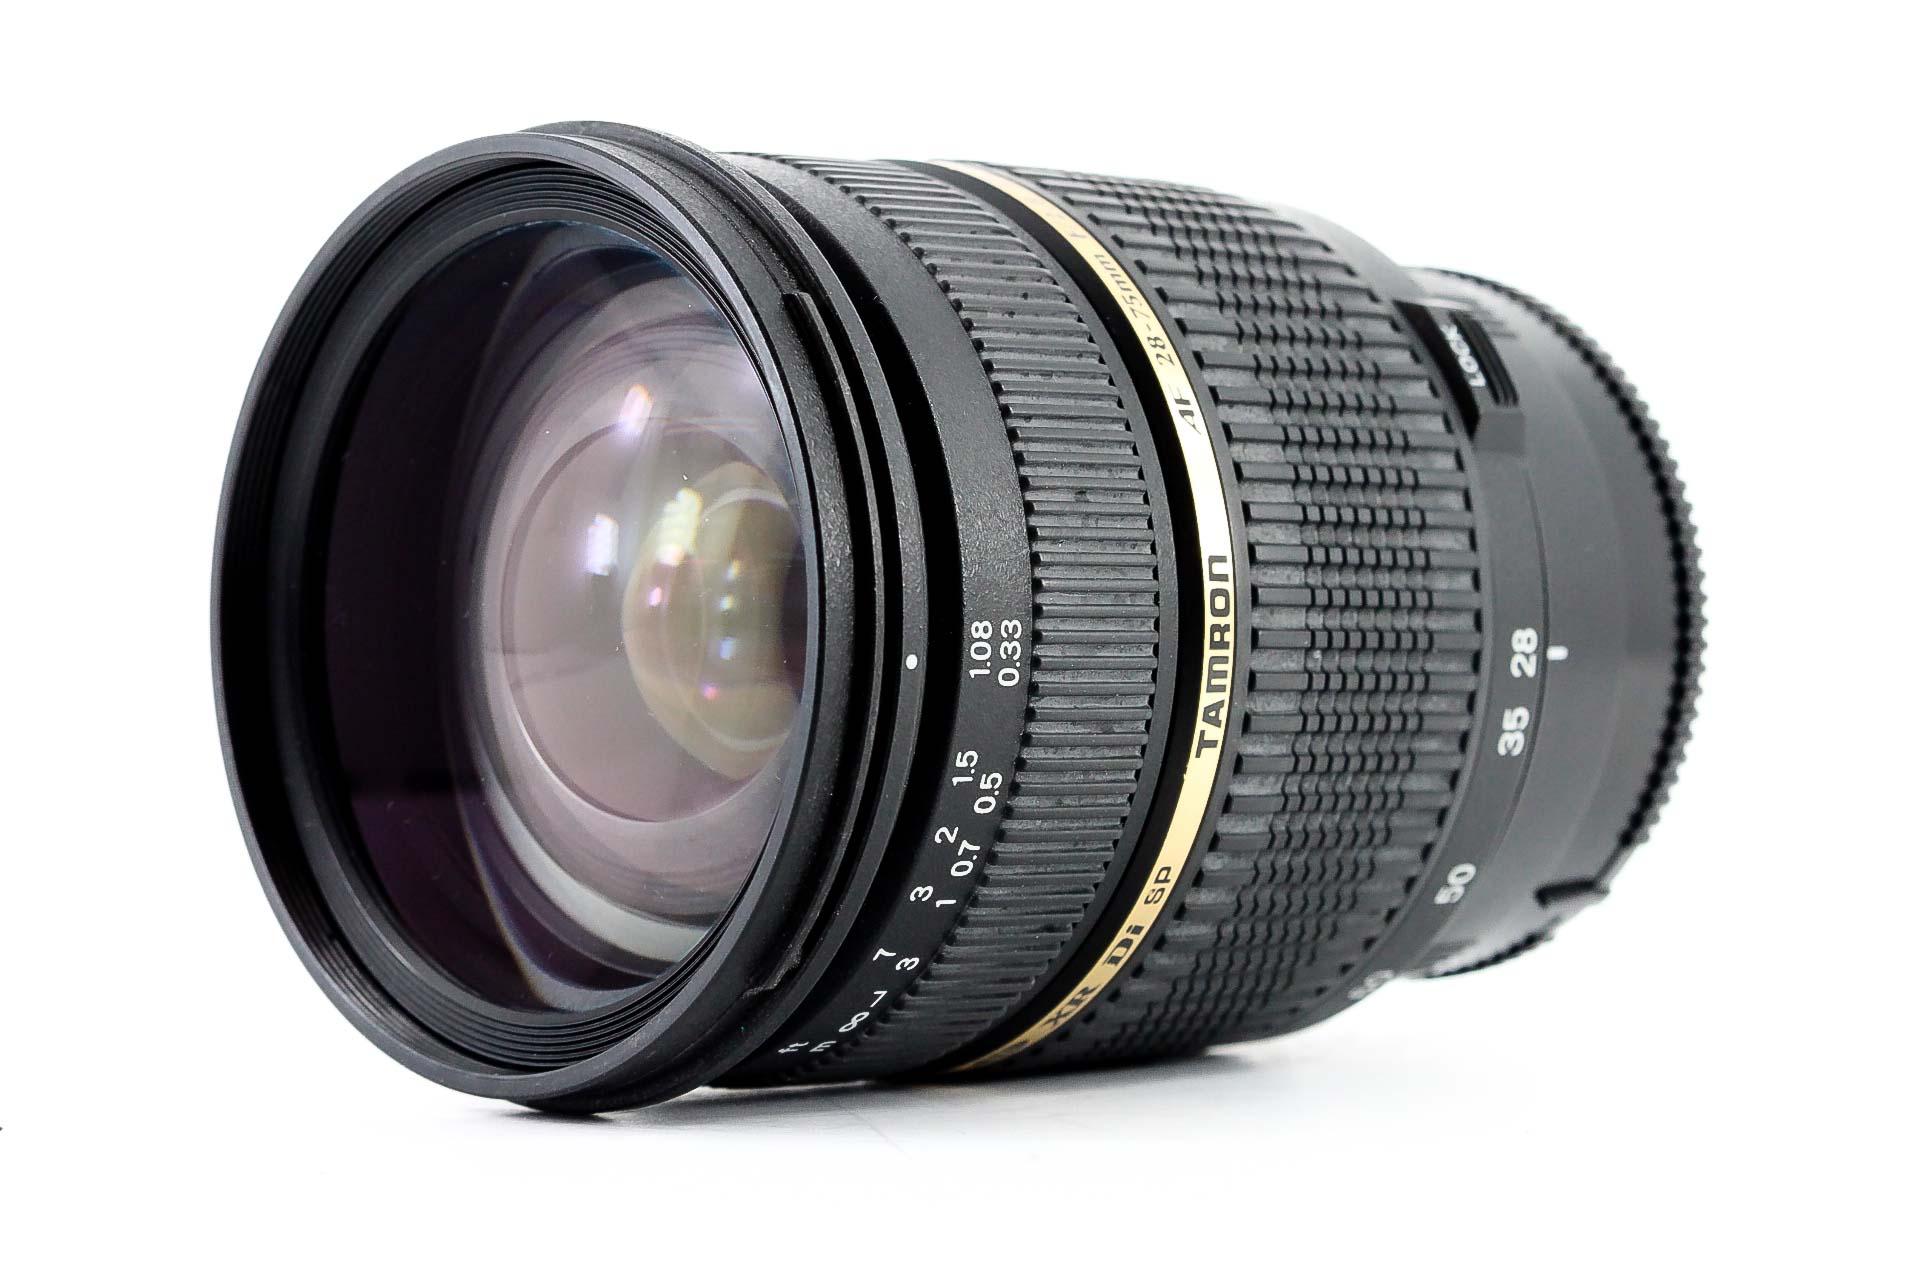 Tamron SP AF 28-75mm f/2.8 XR Di LD Aspherical (IF) Macro Sony Lens